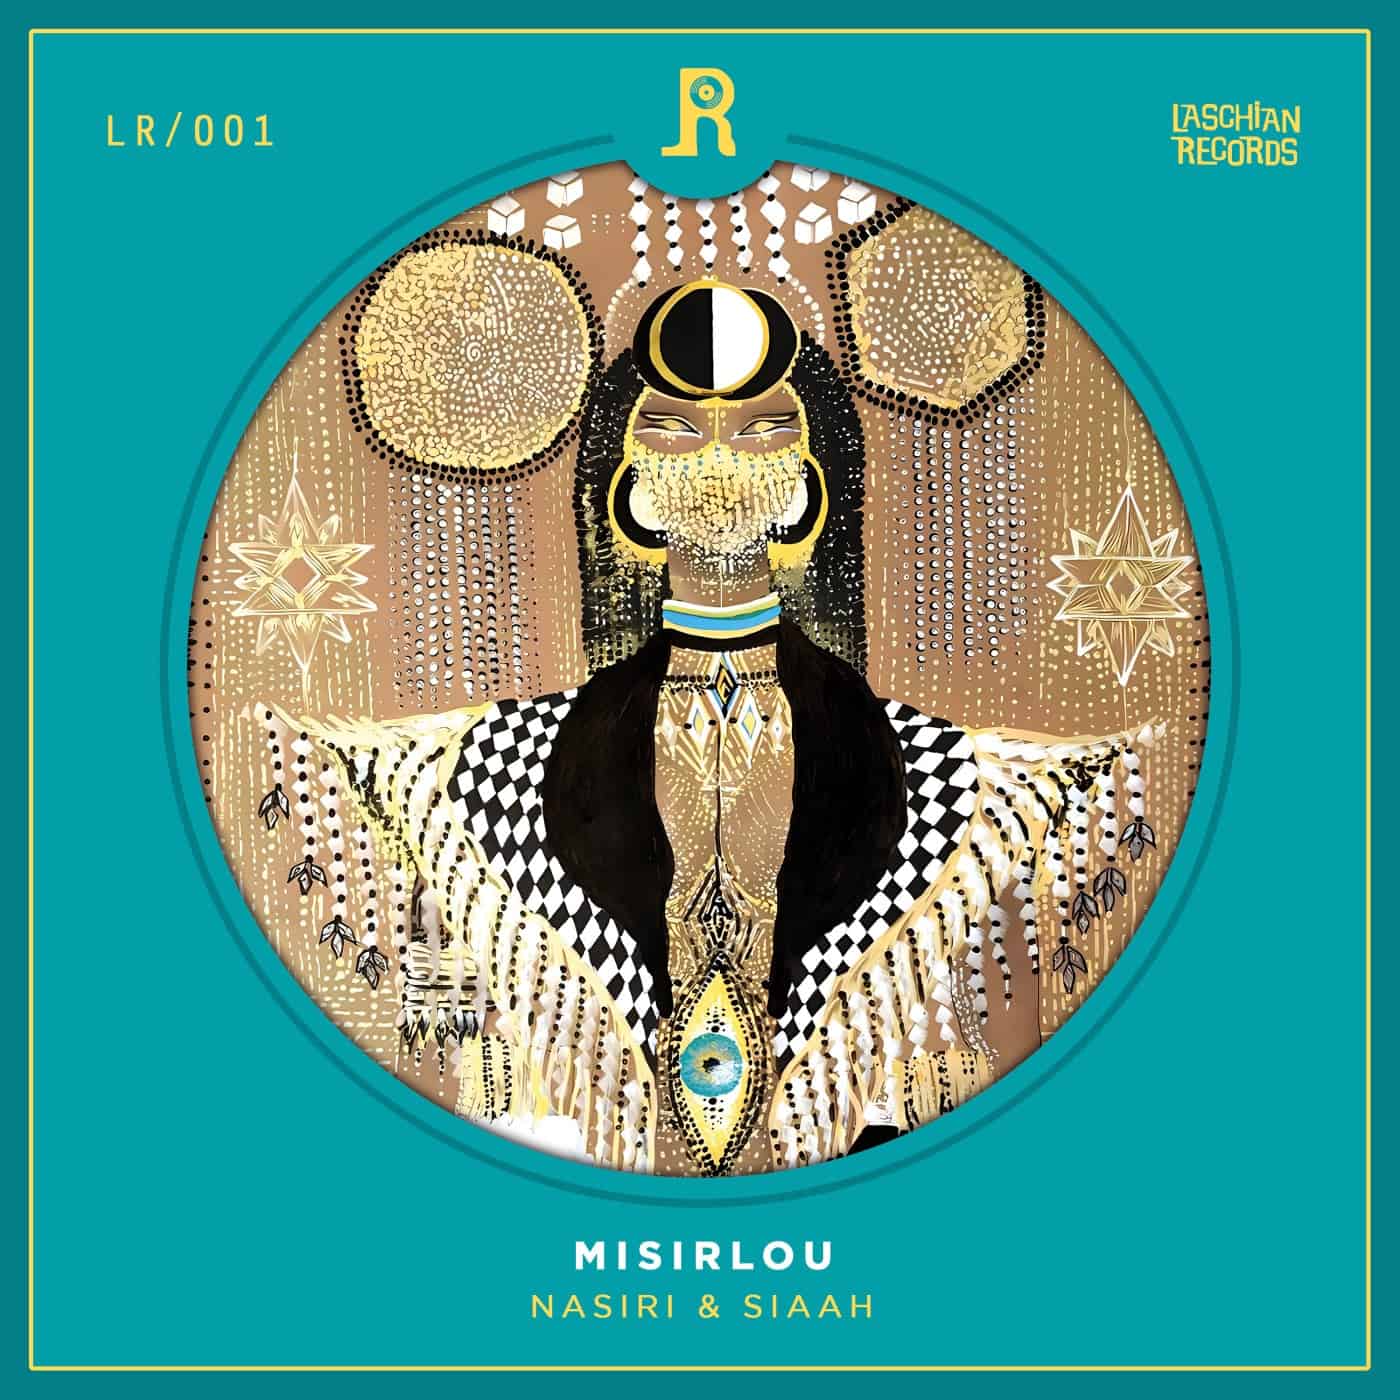 image cover: Nasiri, SIAAH - Misirlou on Laschian Records